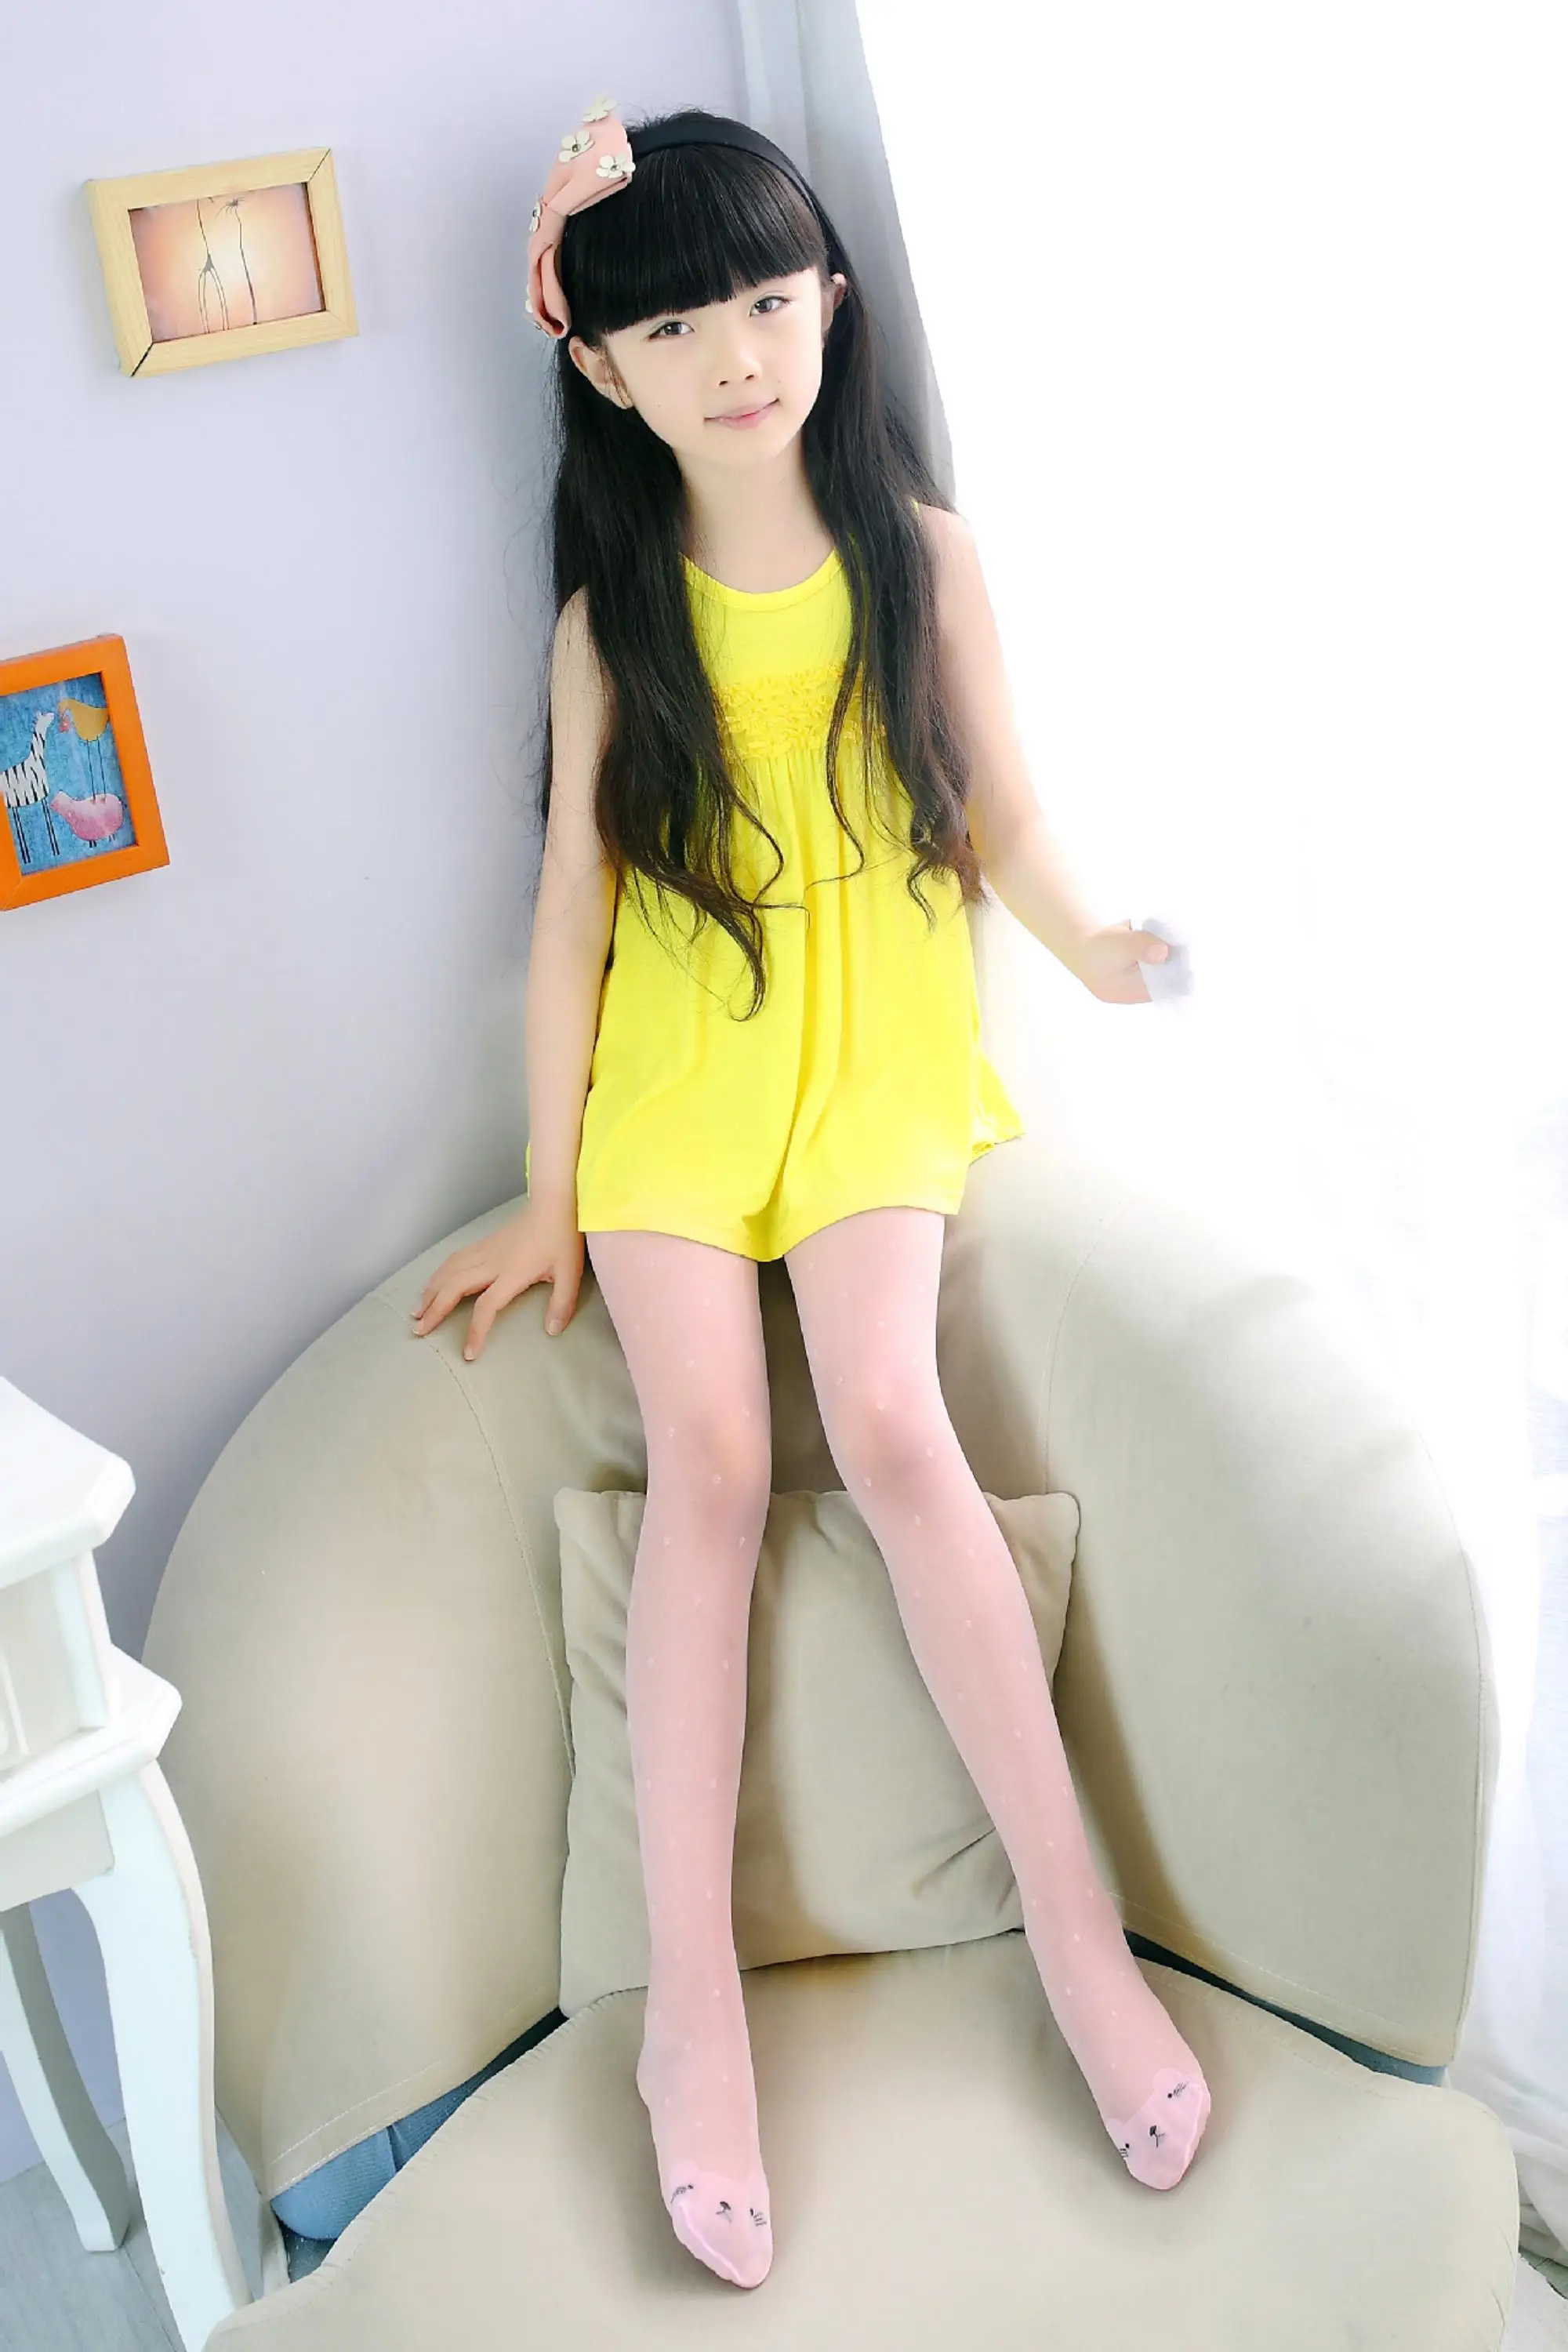 stockings in Asian girl